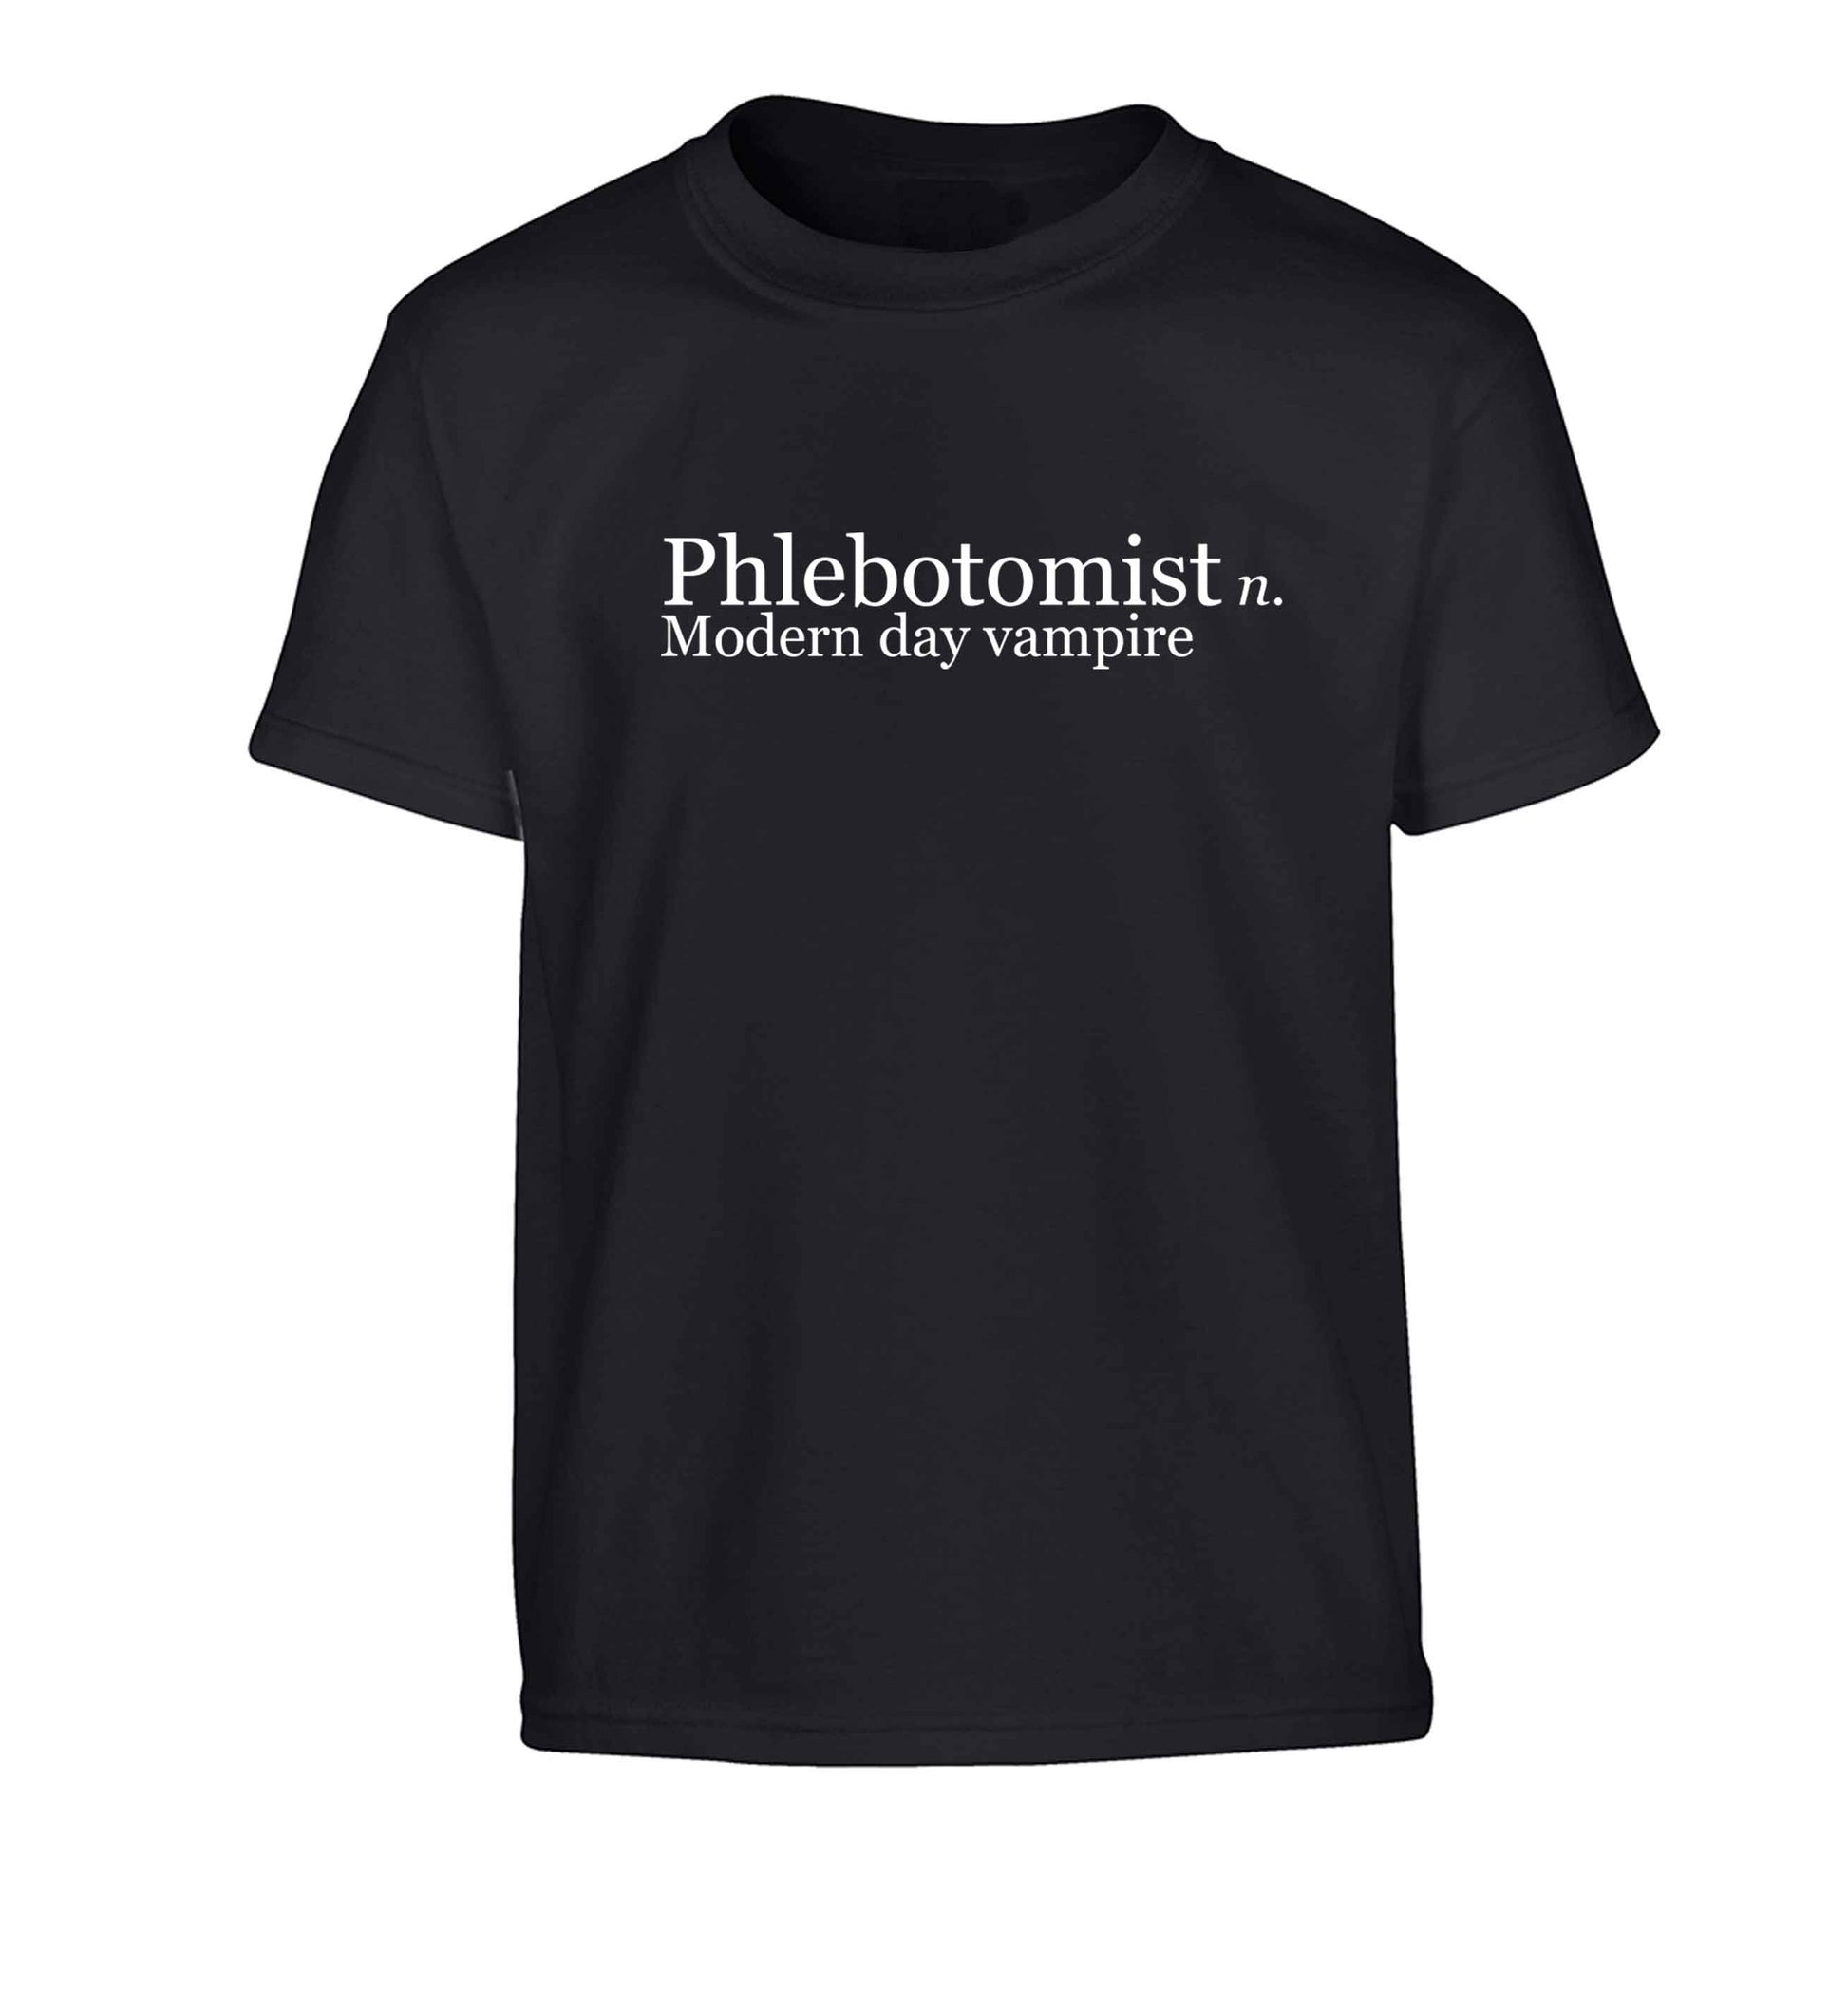 Phlebotomist - Modern day vampire Children's black Tshirt 12-13 Years